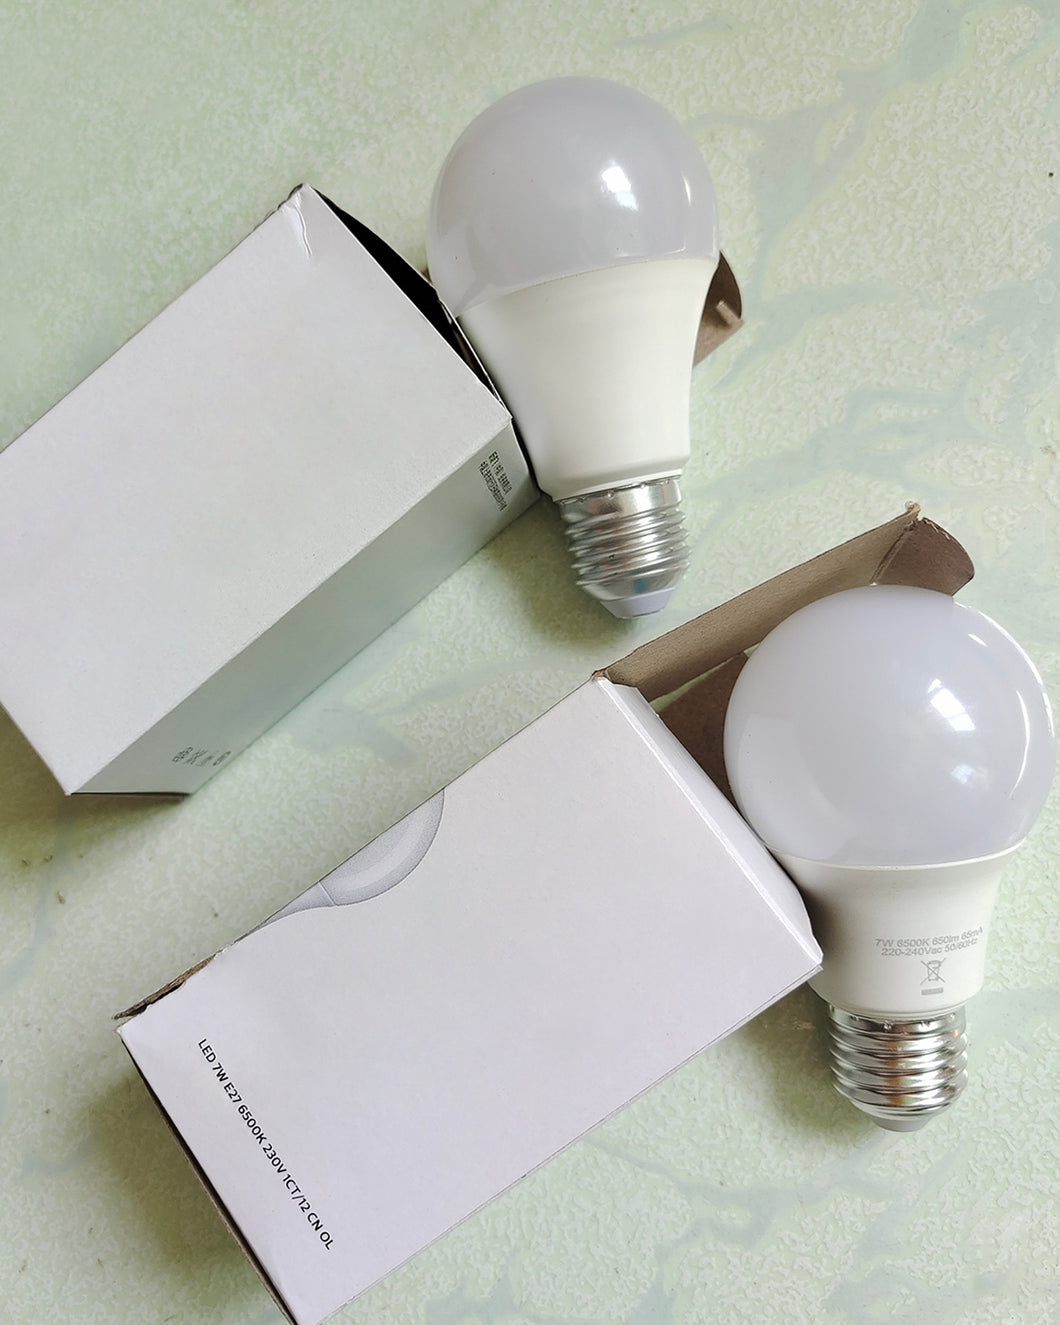 FEPEHOLI Light Bulb, 12W LED Bulbs Daylight White E26 Standard Base LED Bulb, UL Listed